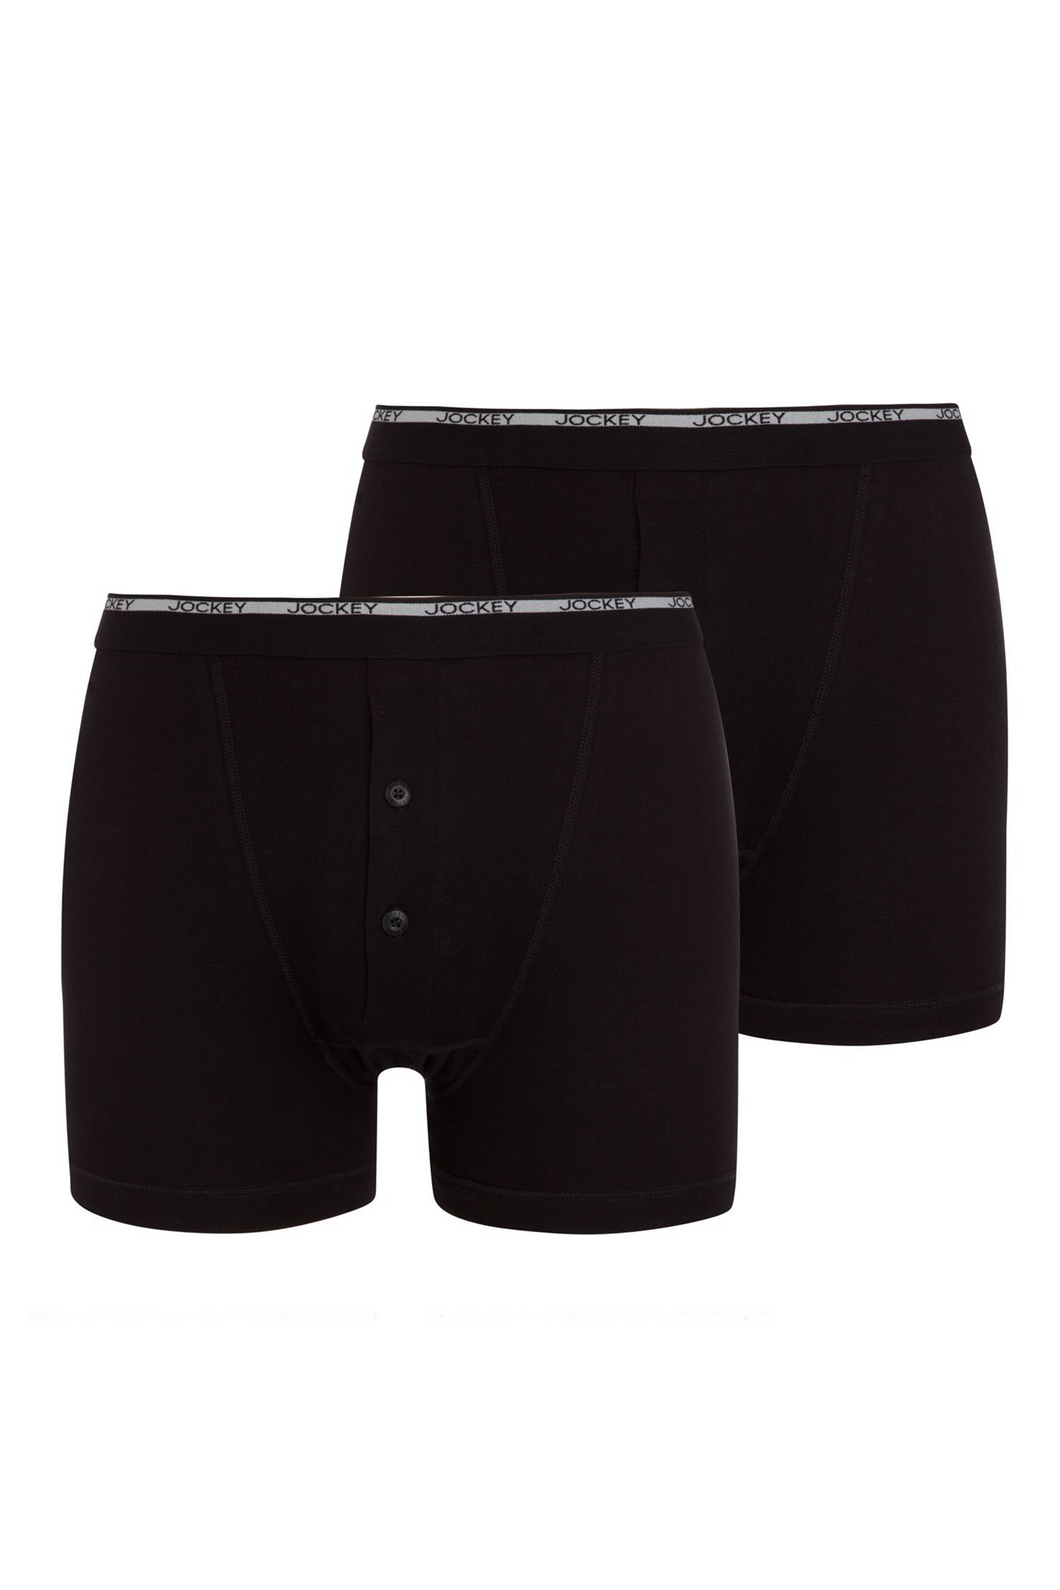 Jockey Men's Black Boxer Shorts Underpants Big & Tall